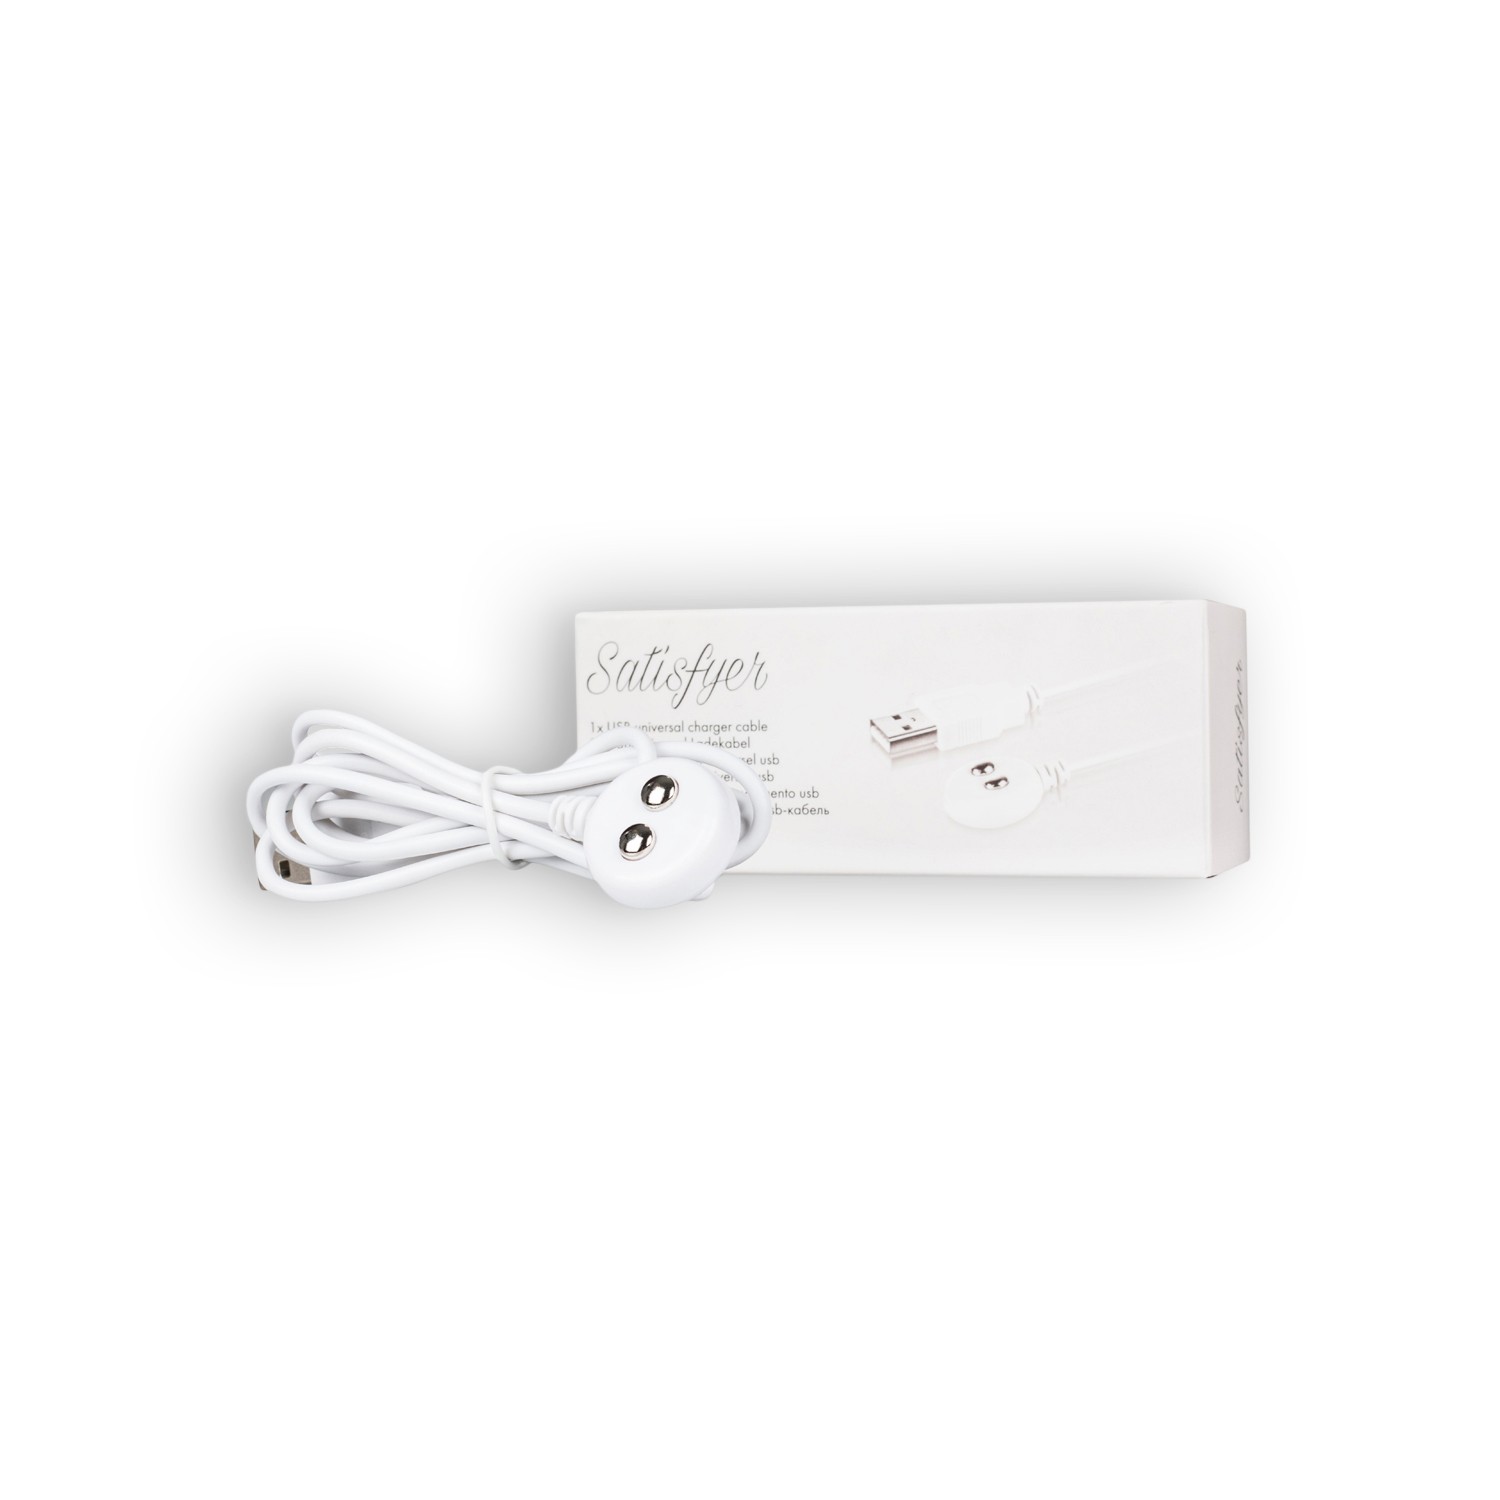 Satisfyer cable de carga, cable de carga USB magnético para todos